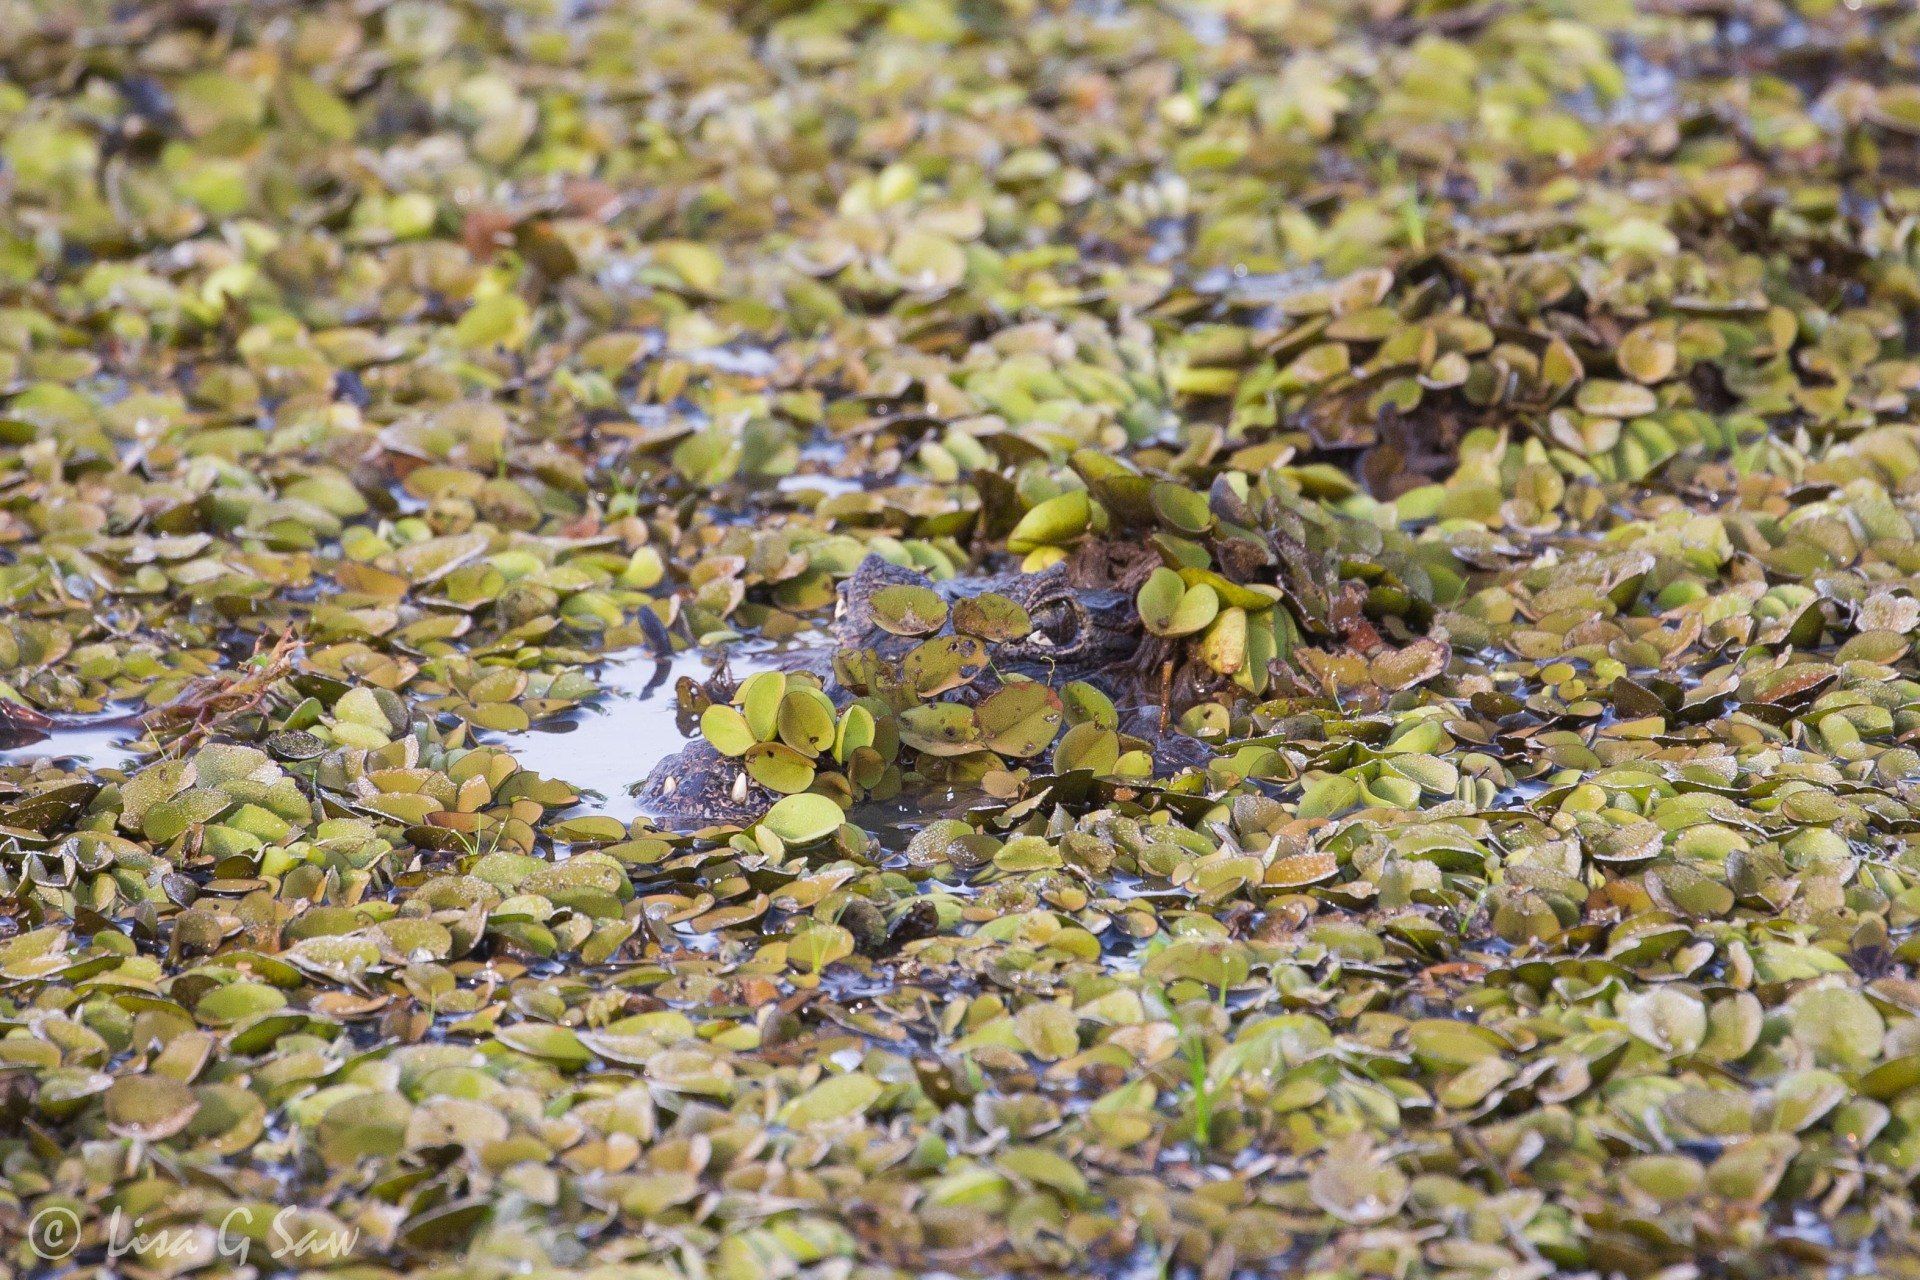 Caiman hidden by vegetation in water